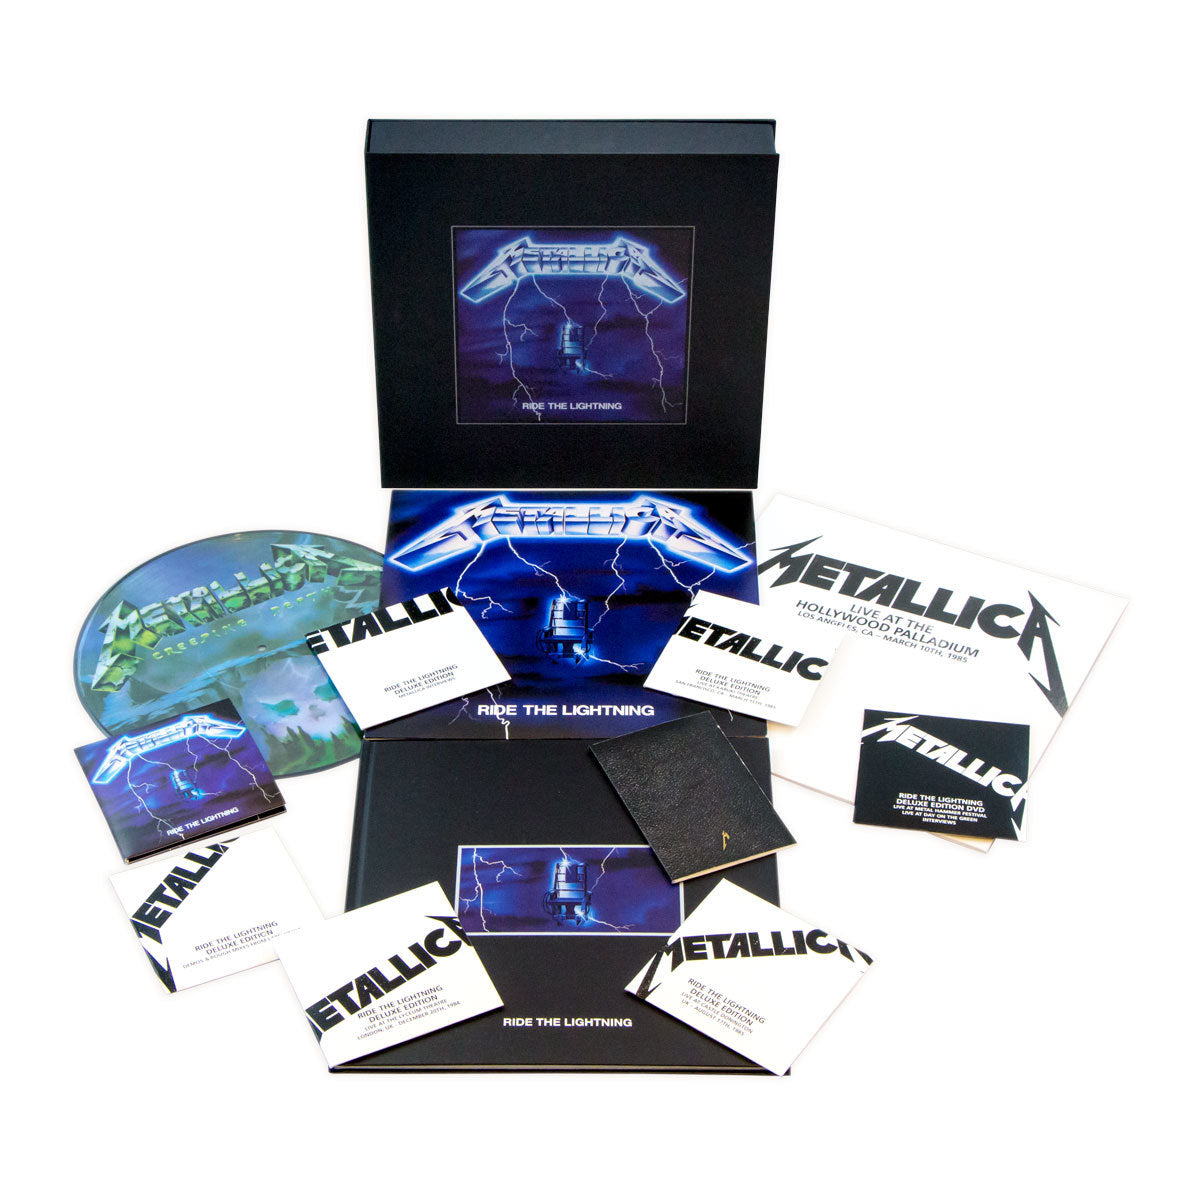 Metallica - Ride The Lightning (4LP/6CD/1DVD box set) - Vinyl - New